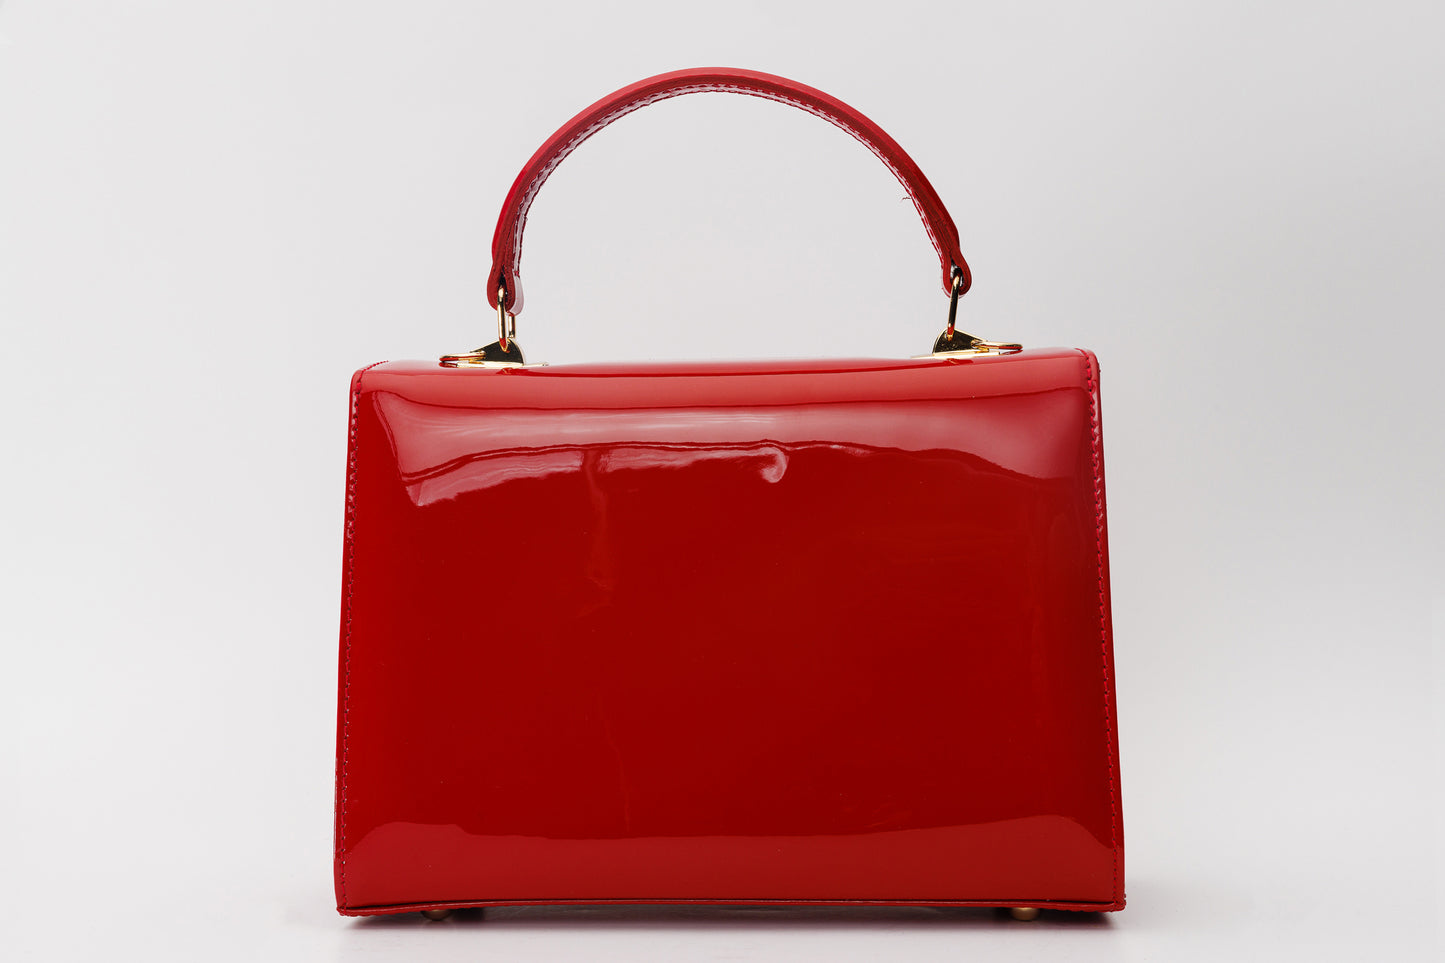 The Ege Red Patent Leather Handbag